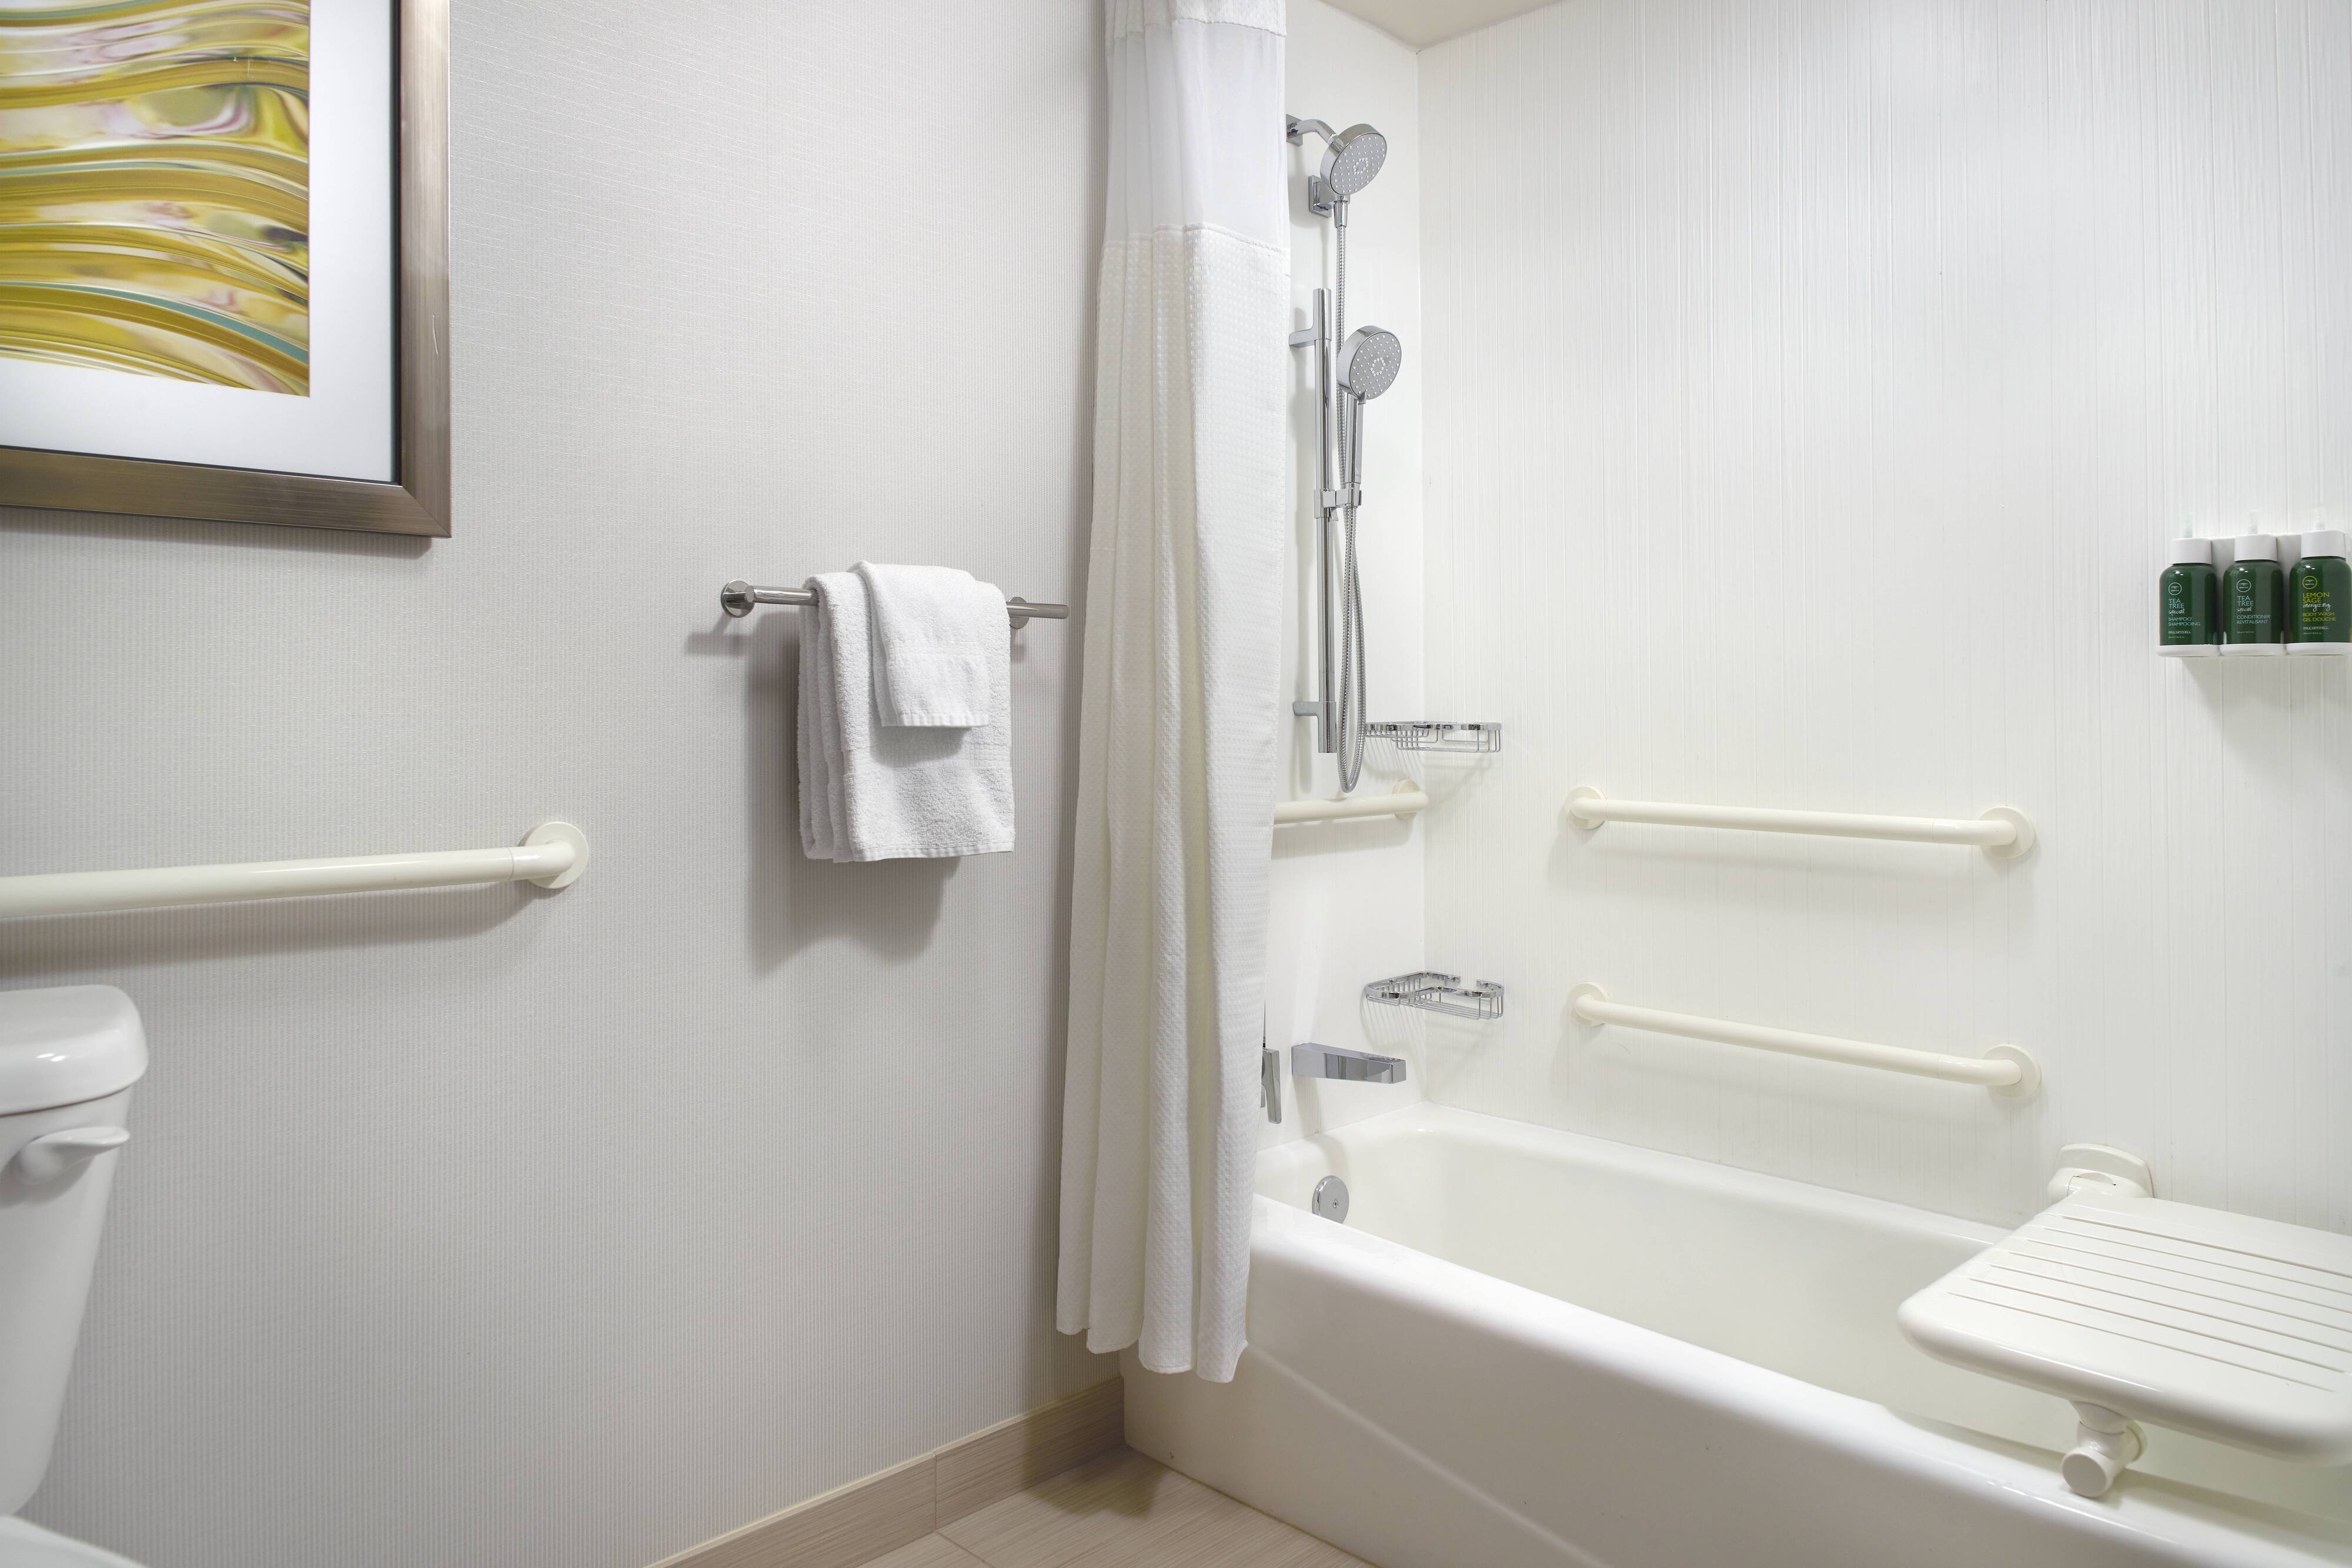 Guest Room Bathroom - Accessible Bathtub